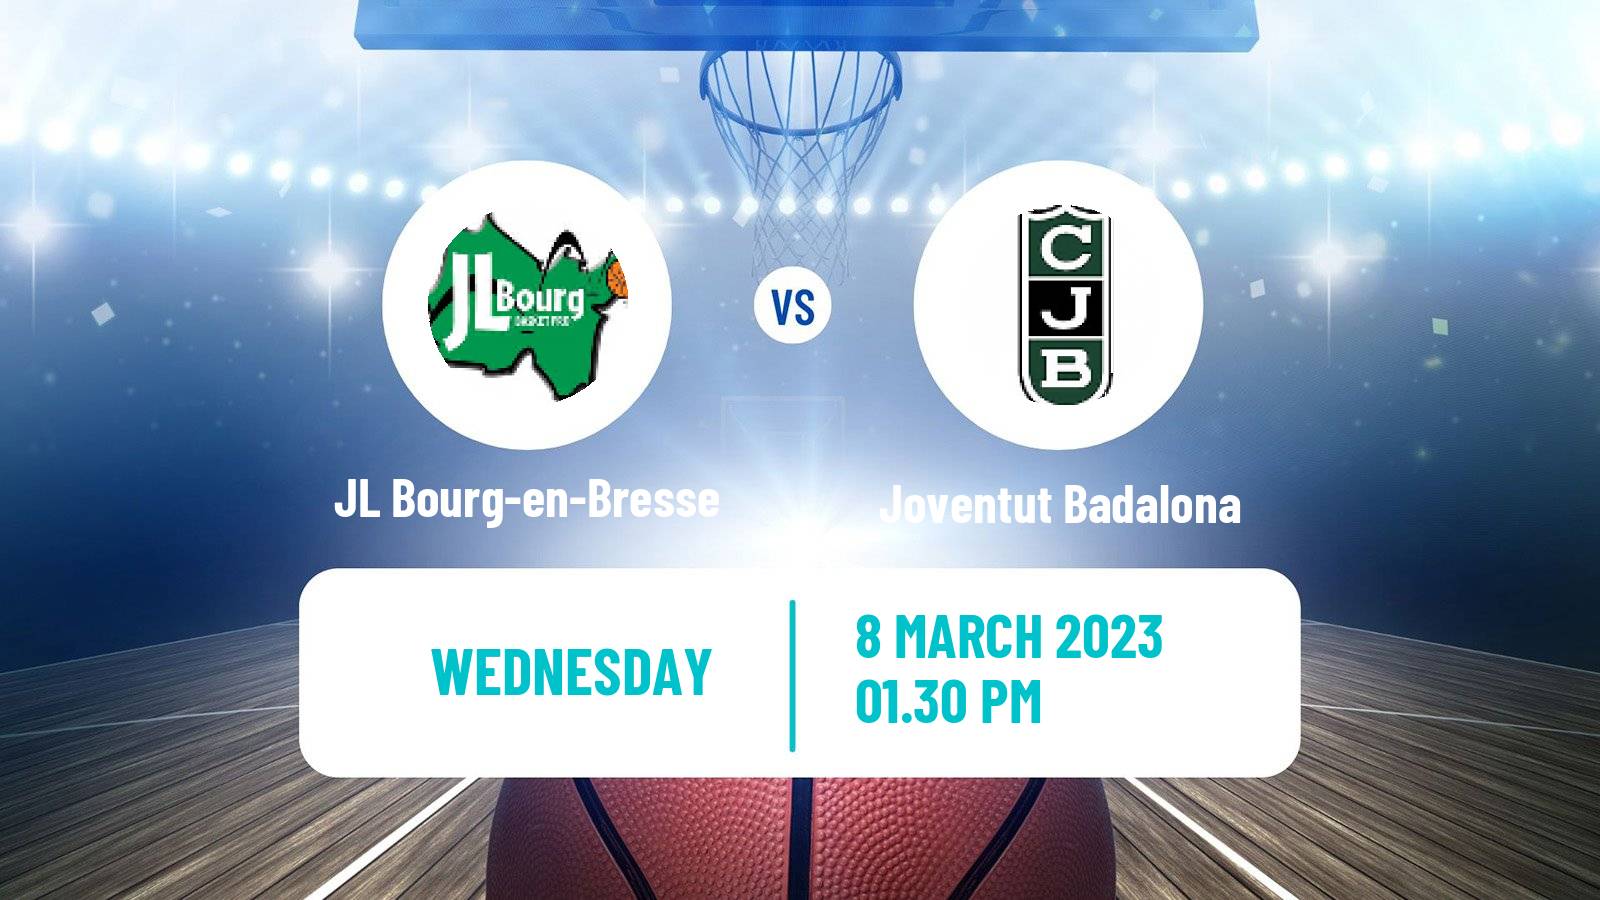 Basketball Eurocup JL Bourg-en-Bresse - Joventut Badalona